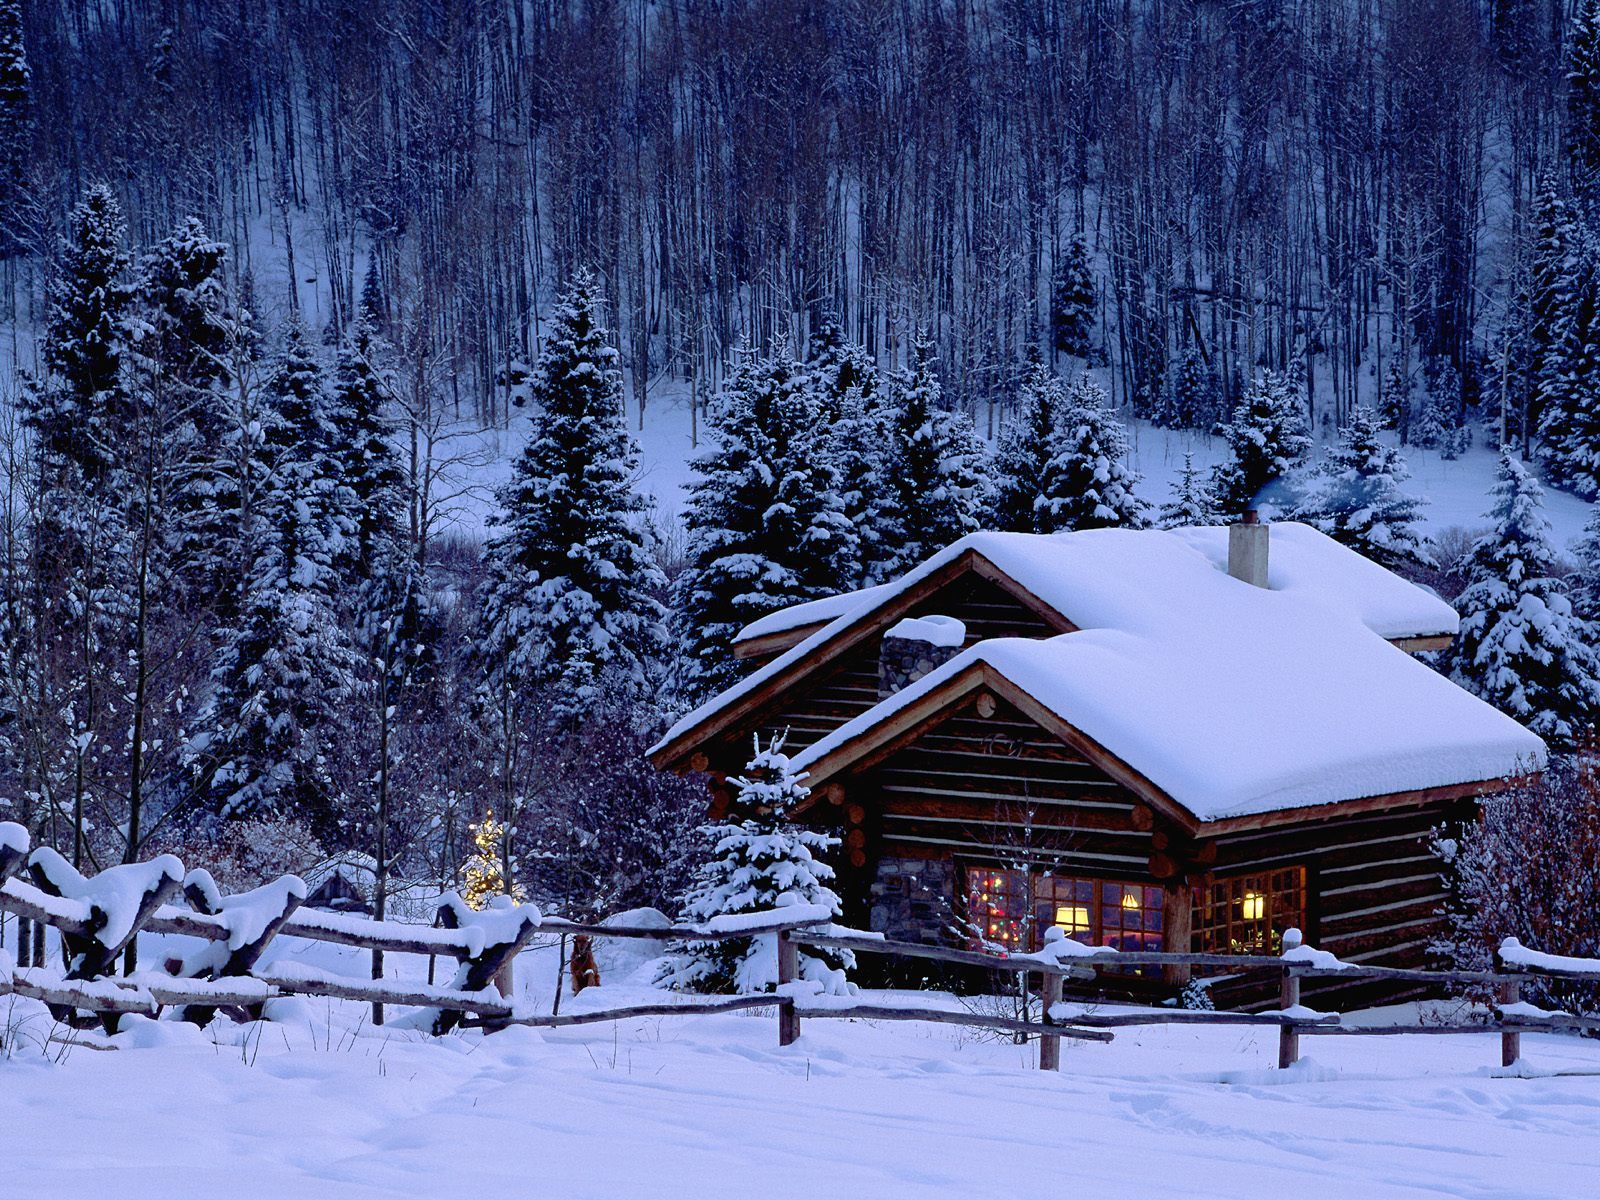 Free Winter Cabin Wallpaper Image